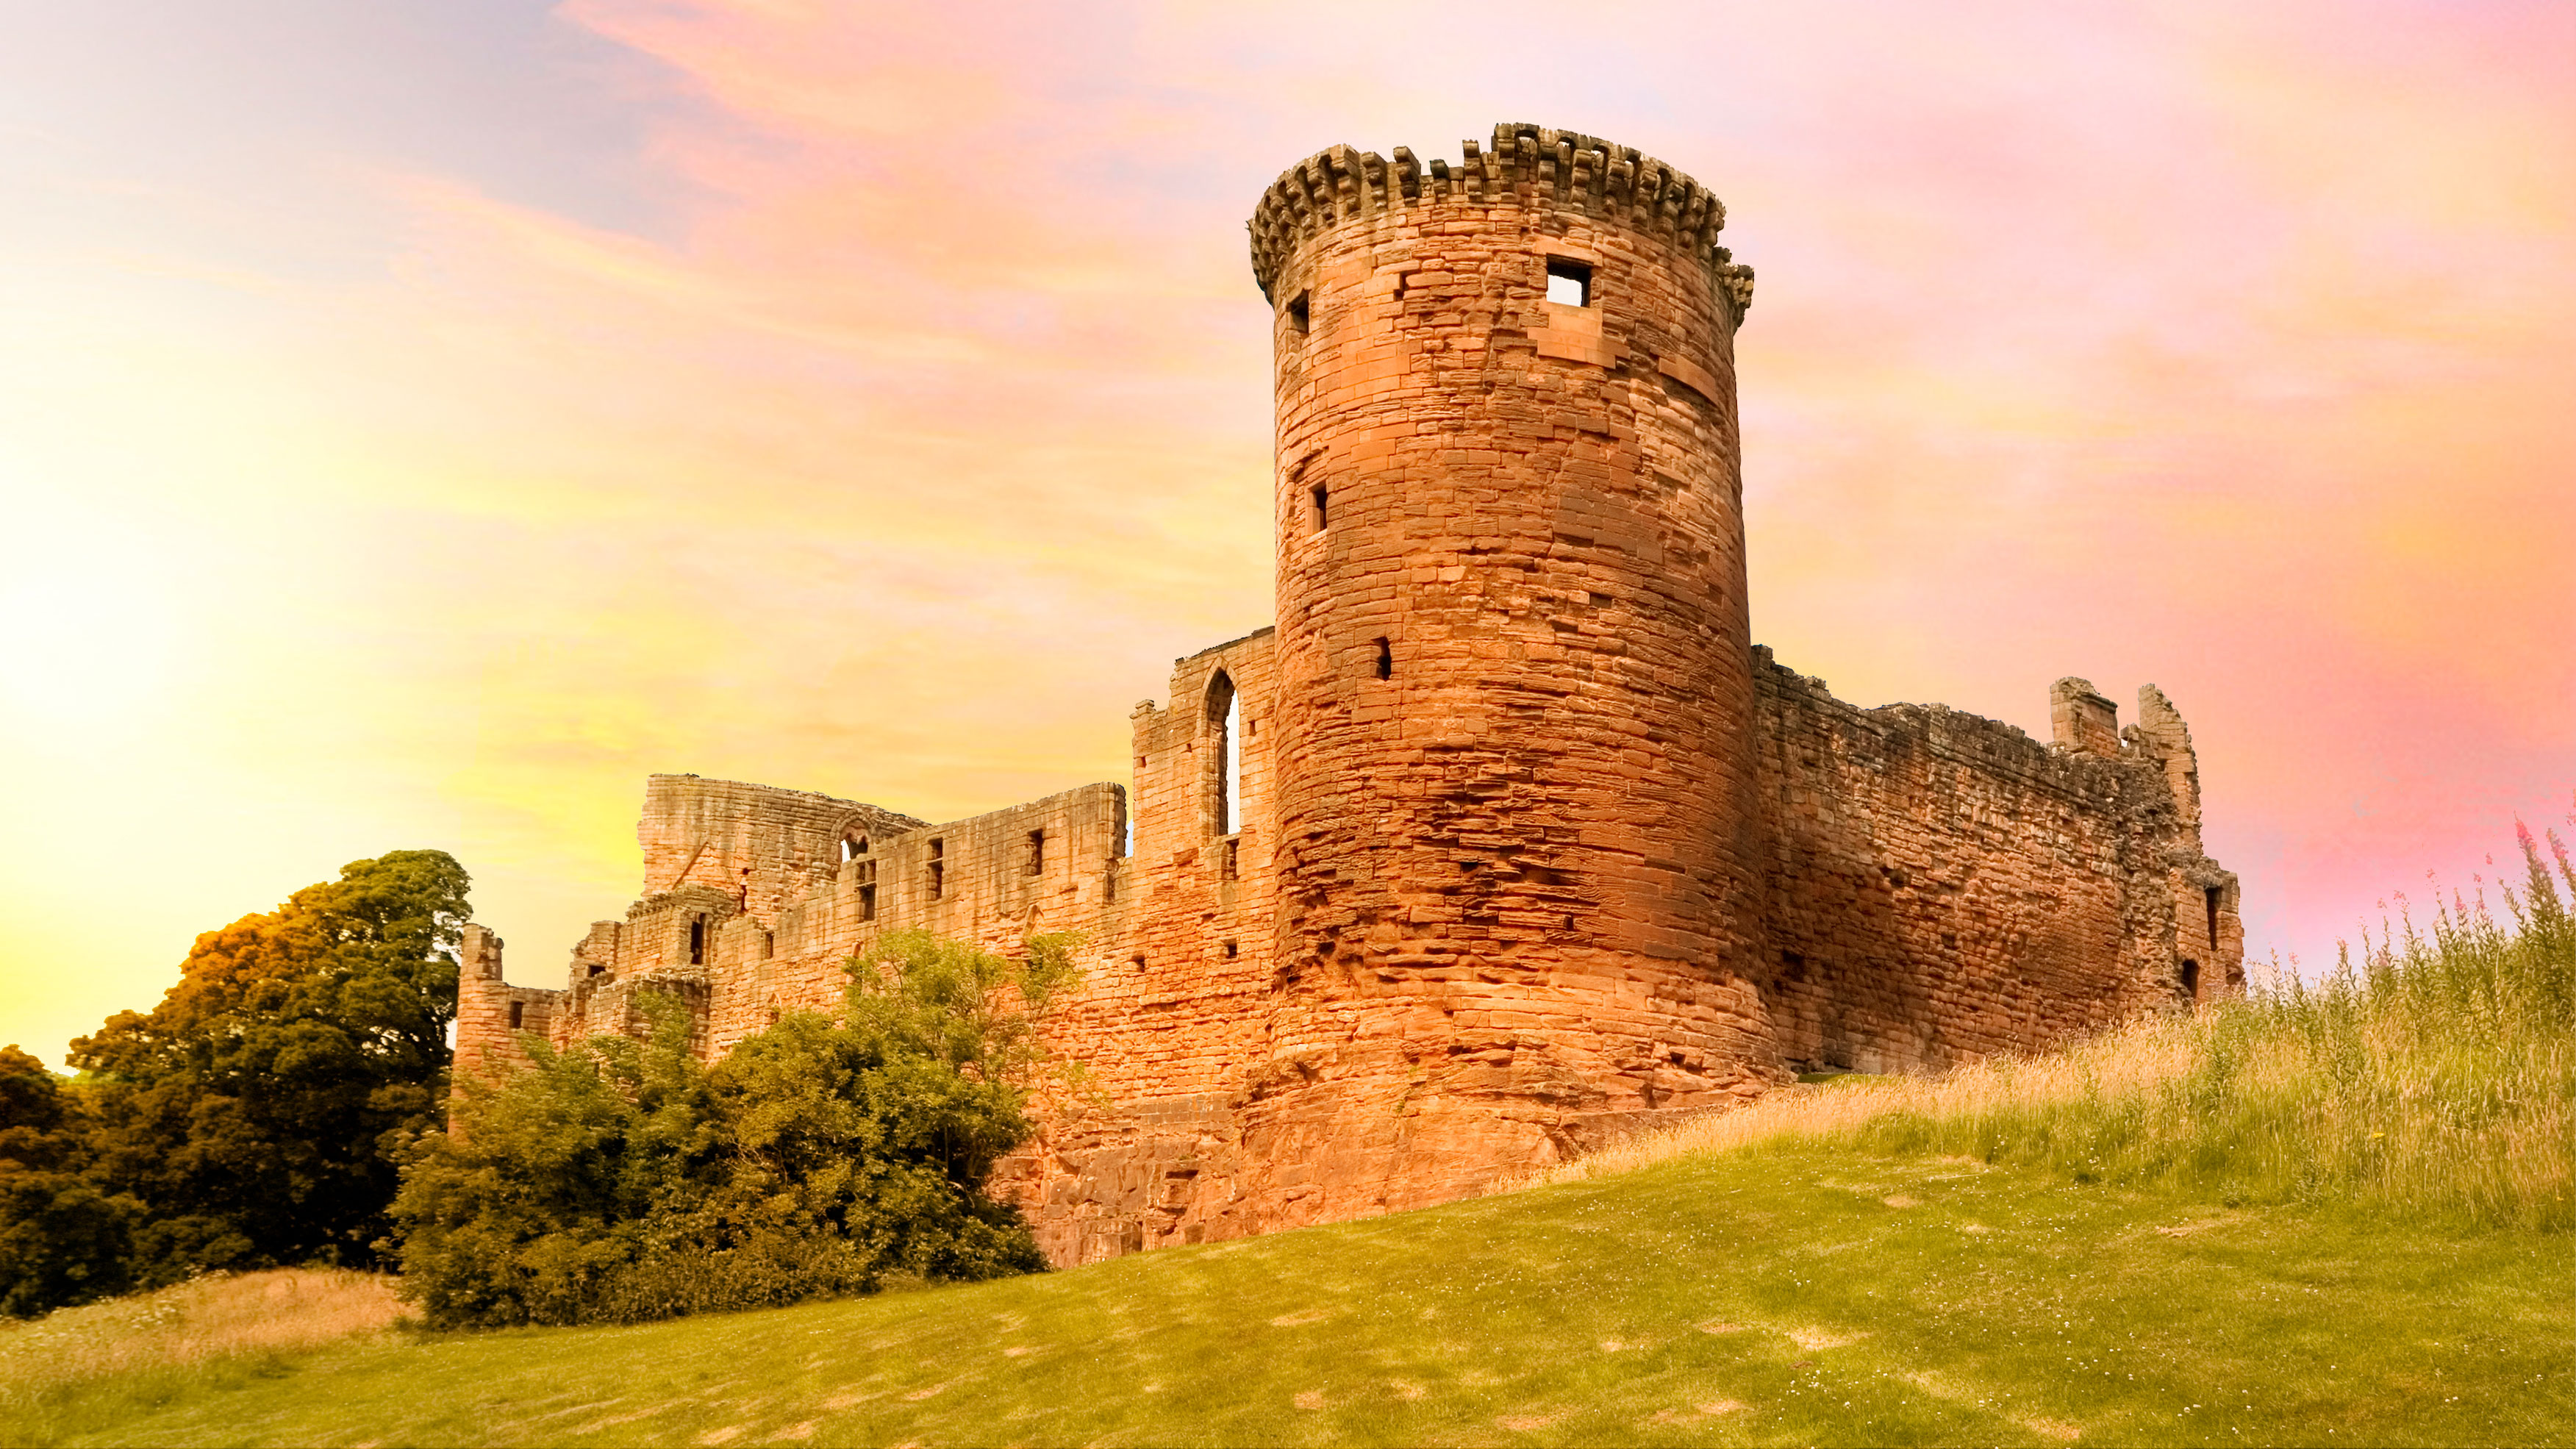 Ruined UK castles spring back to life | CNN Travel